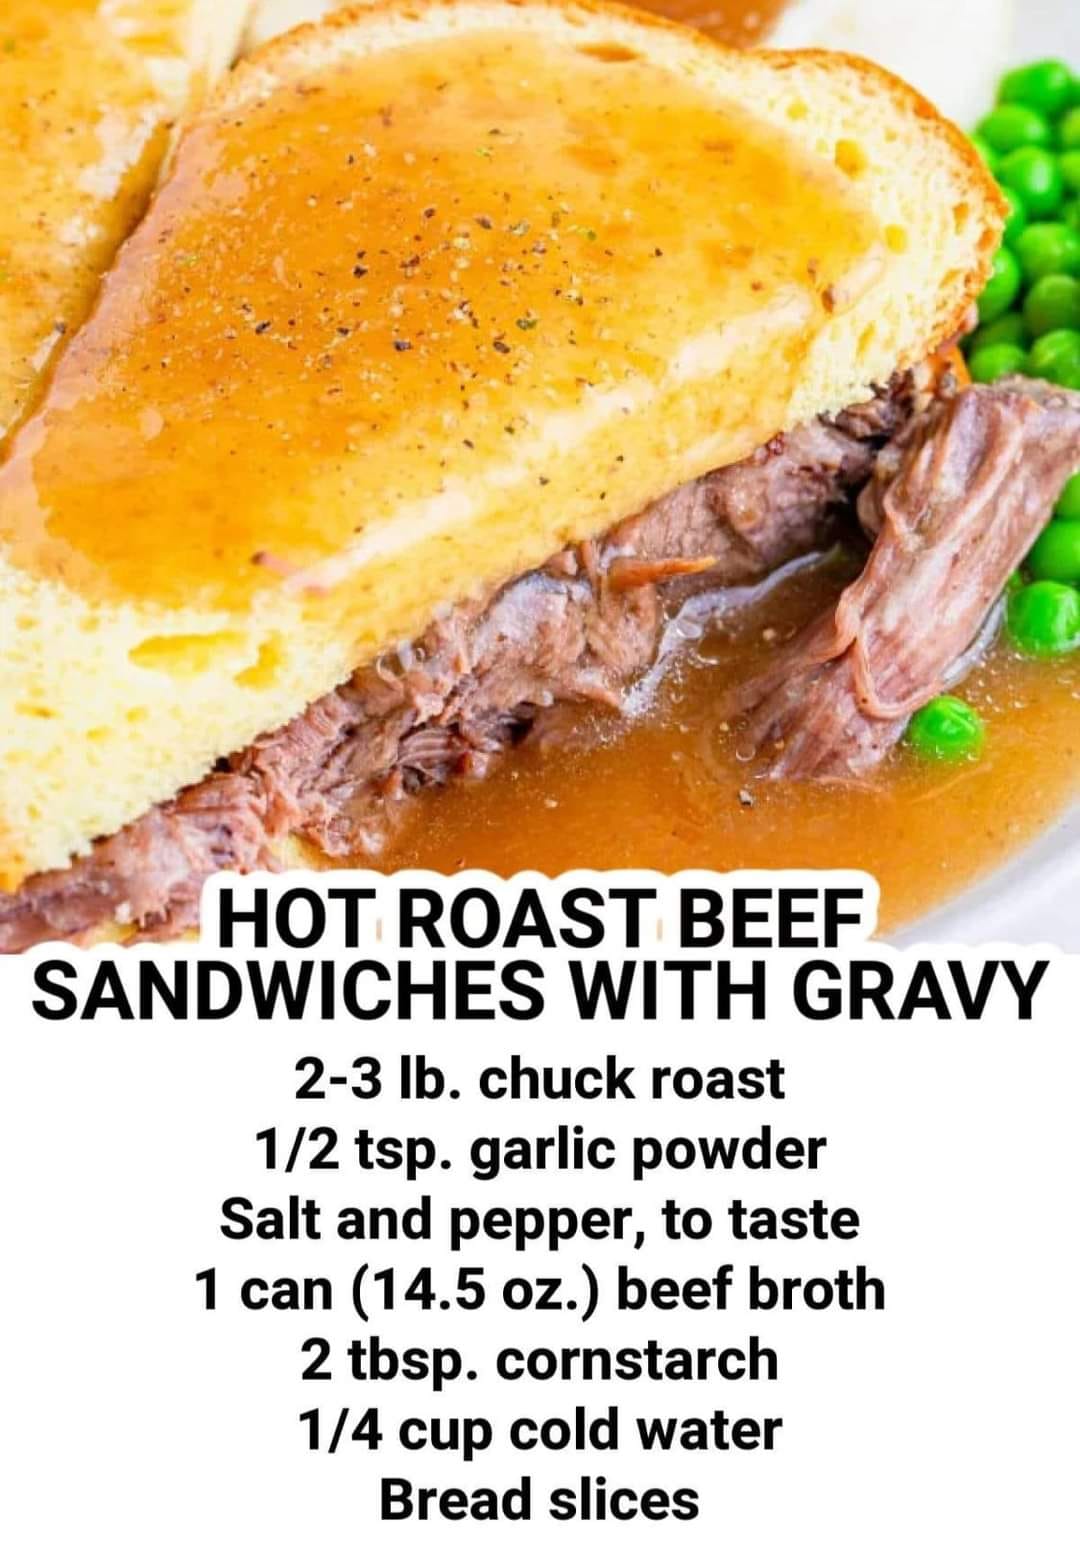 HOT ROAST BEEF SANDWICH WITH GRAVY